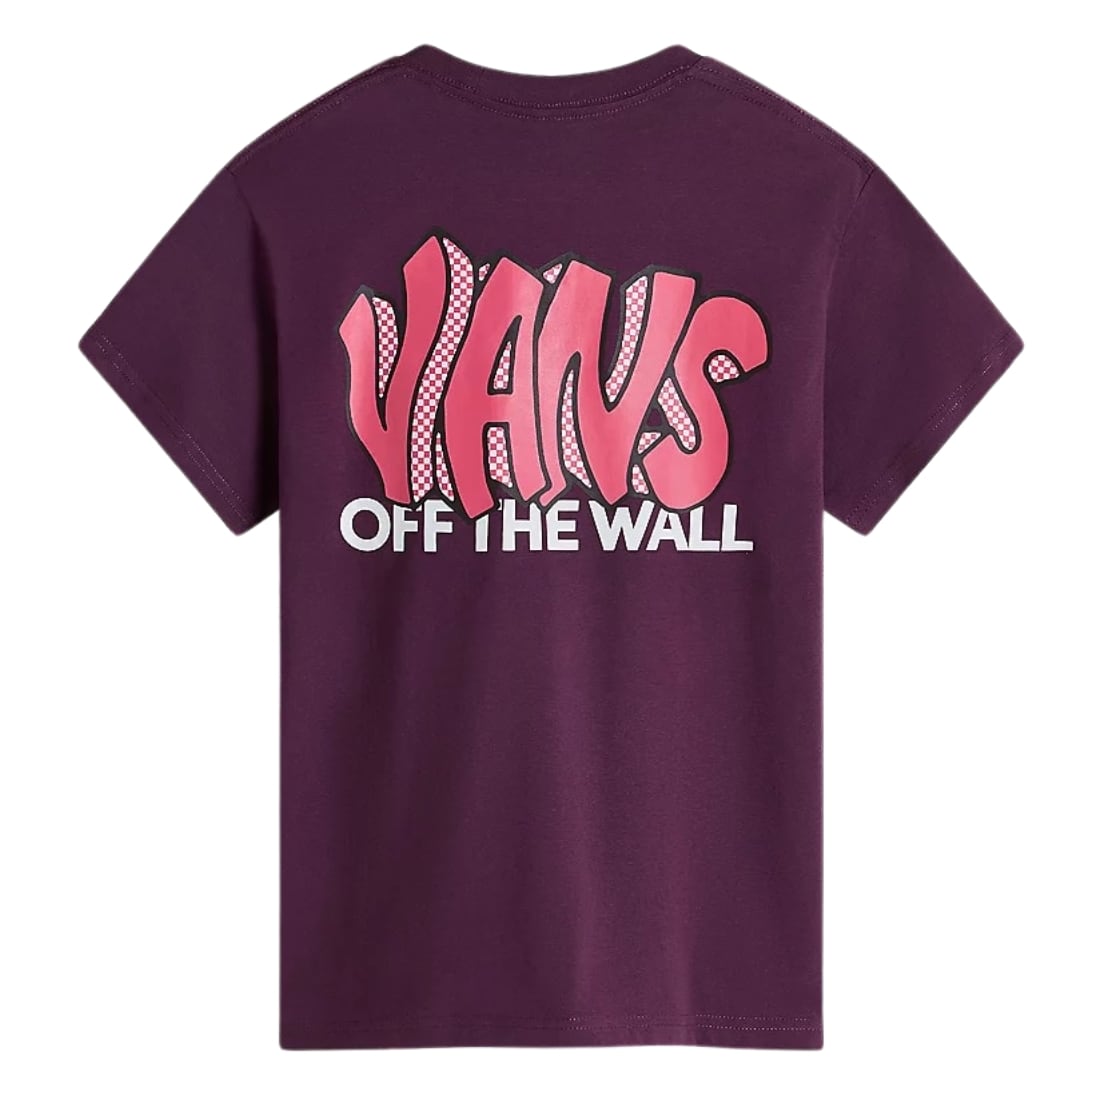 Vans Kids Tag T-Shirt - Blackberry Wine - Boys Skate Brand T-Shirt by Vans